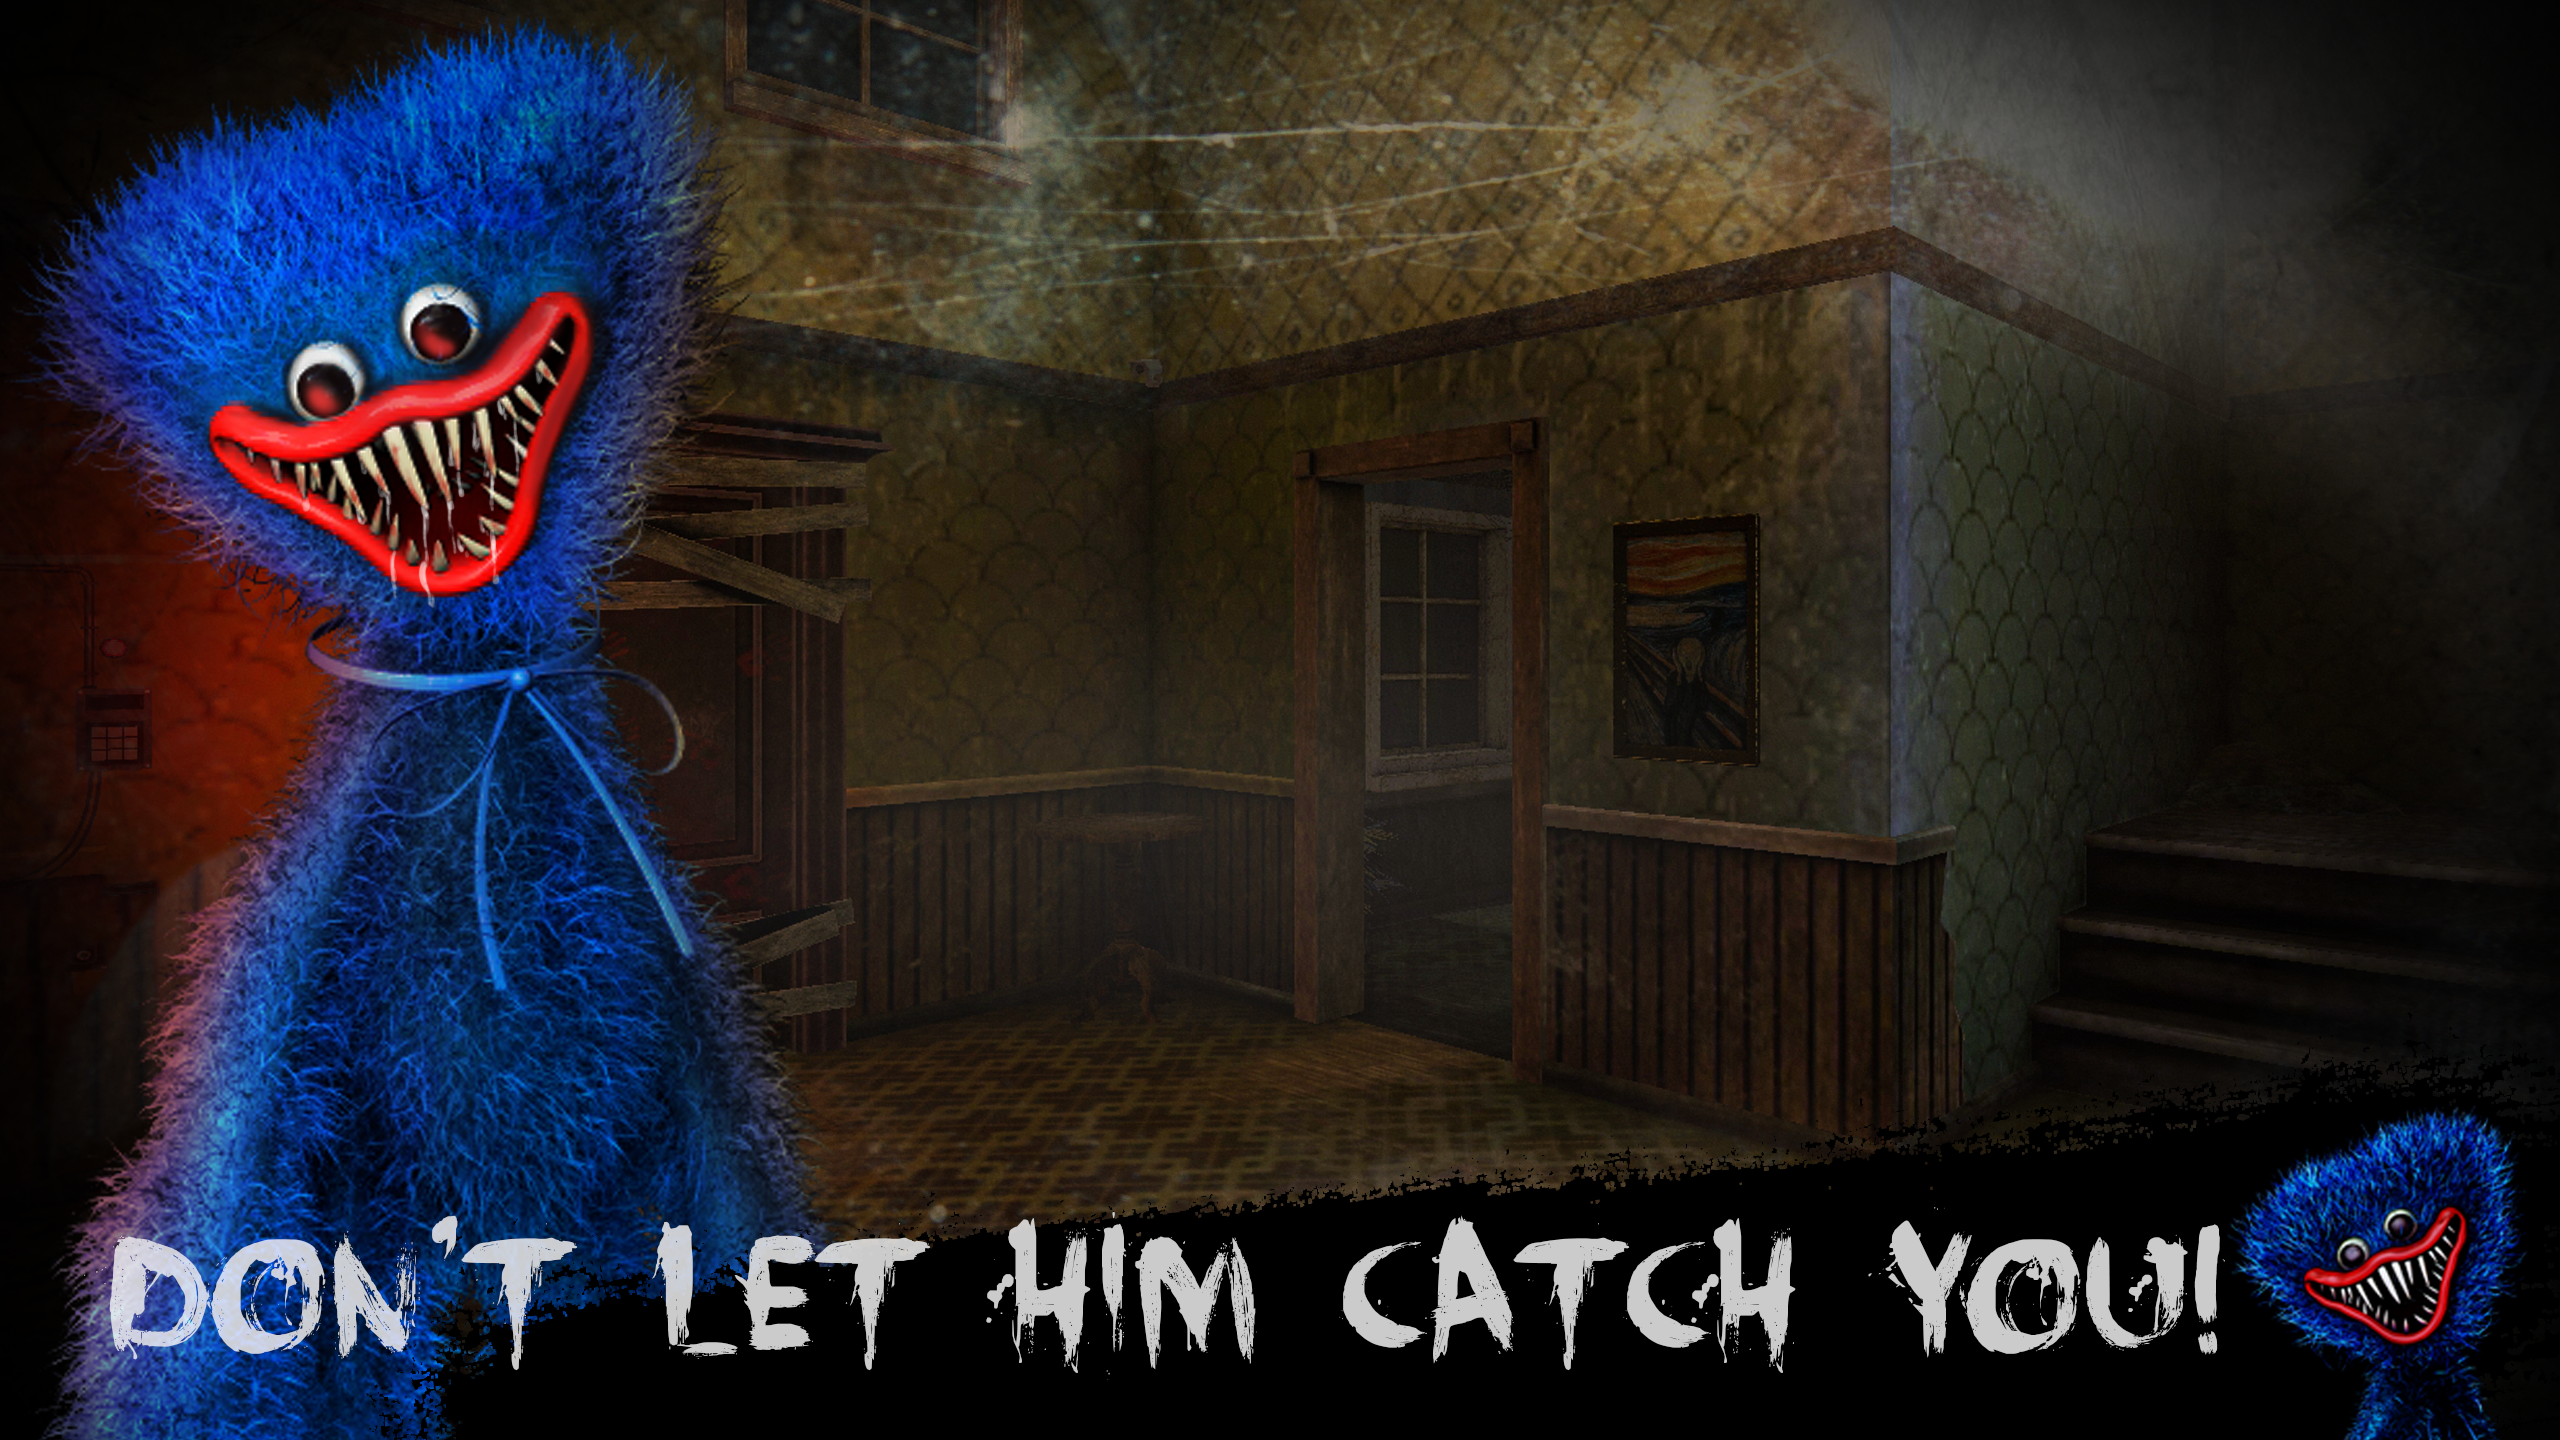 Evil Eyes: Creepy Monster- Thriller Horror Game 3D APK for Android Download